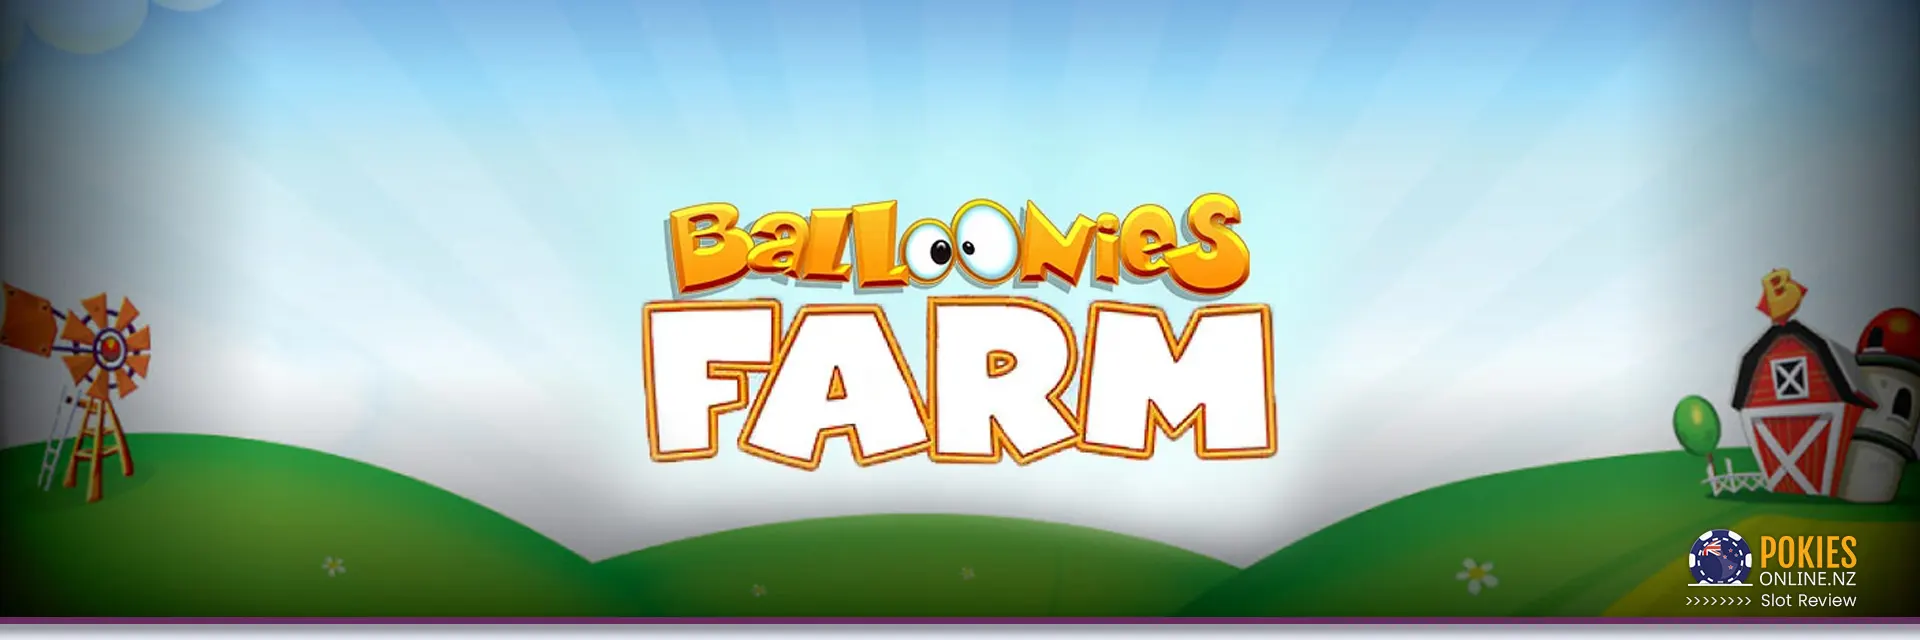 Baloonies farm slot Banner